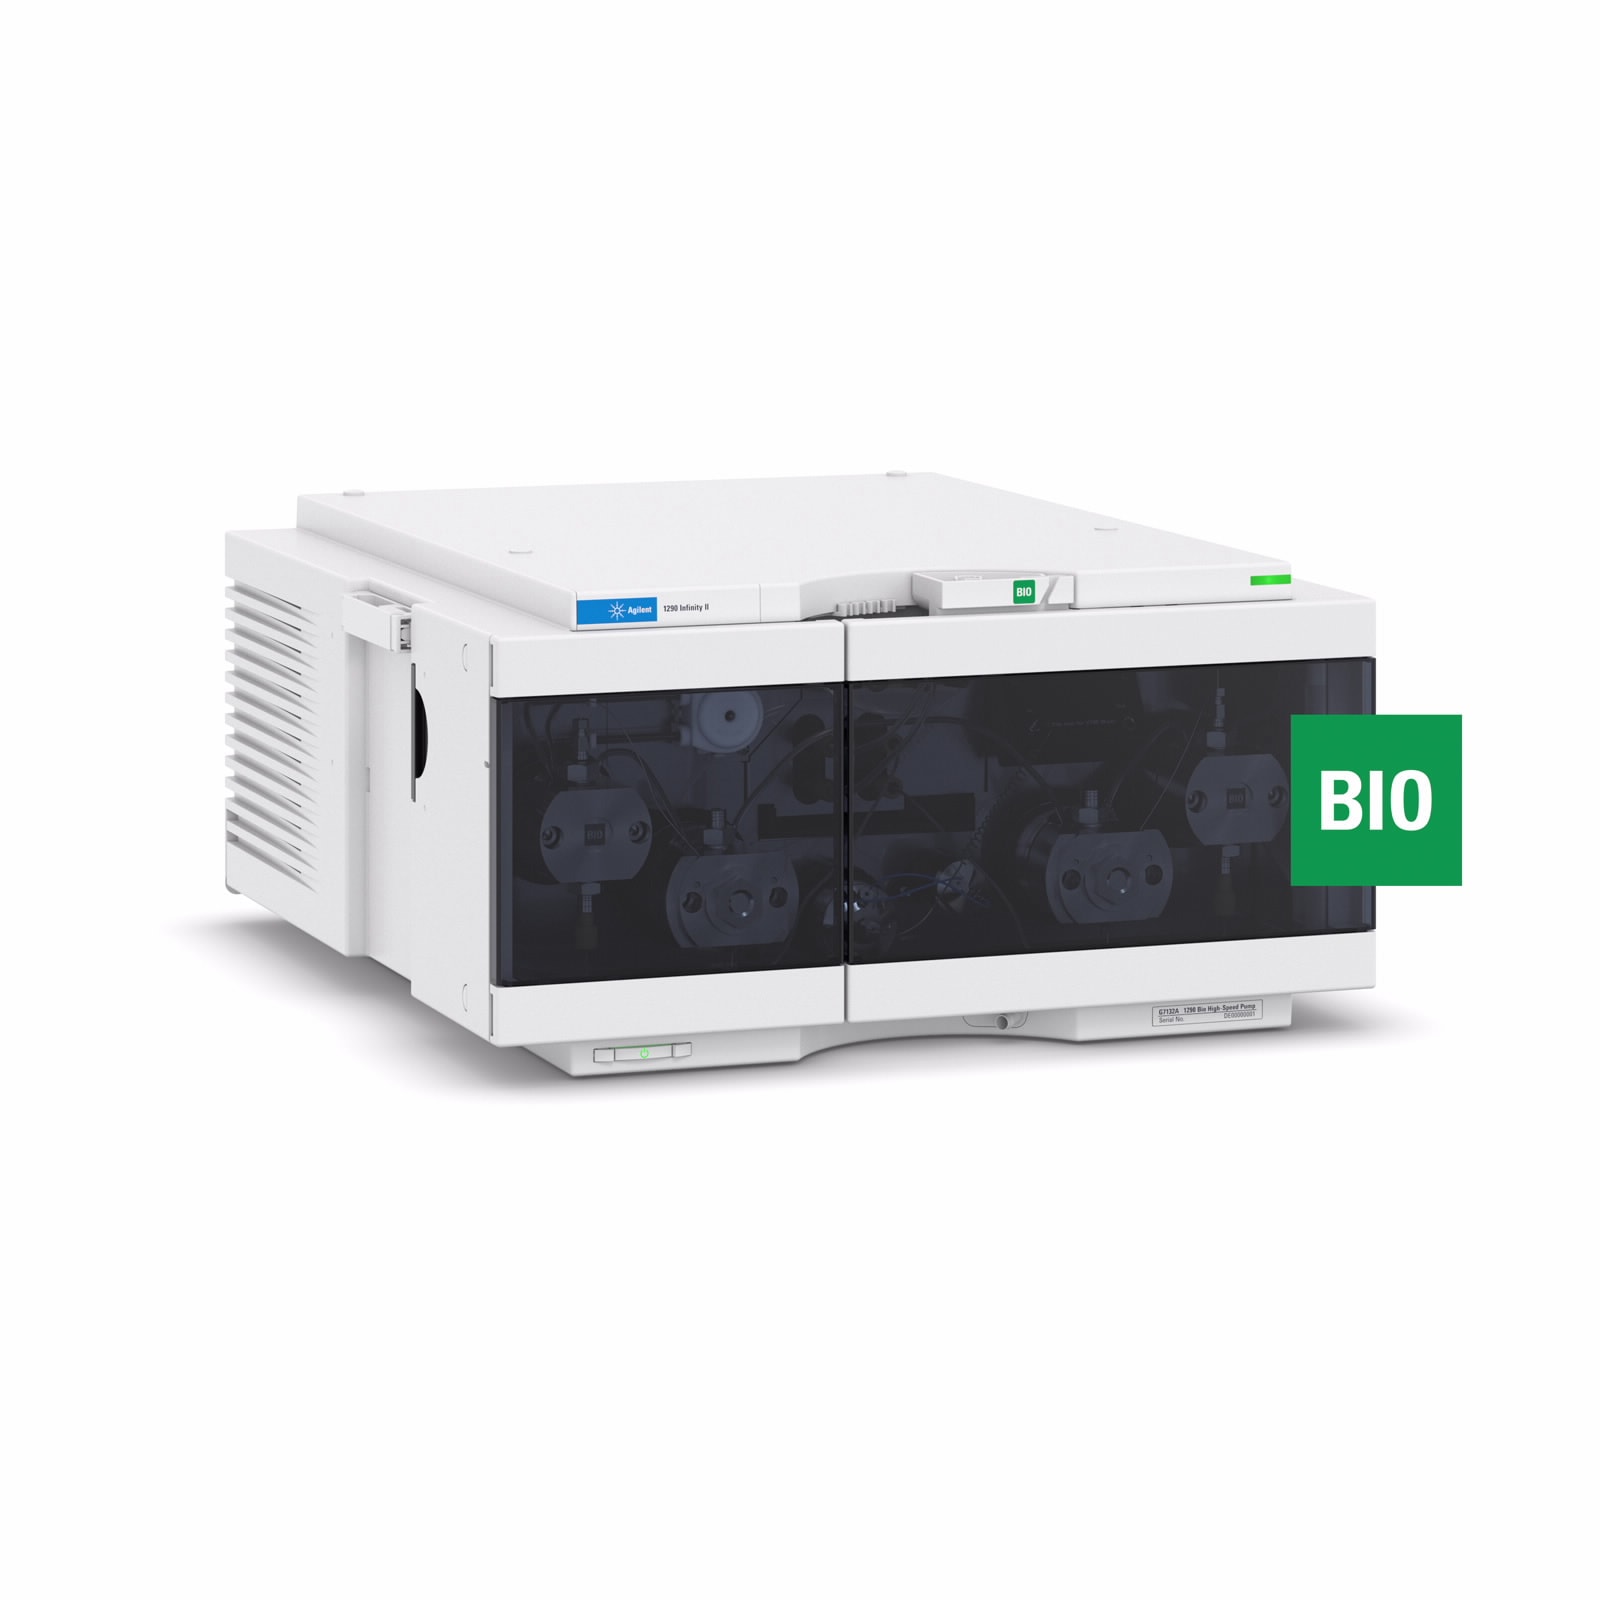 UHPLC Bio Binary Pump, 1290 Infinity II Bio High-Speed Pump